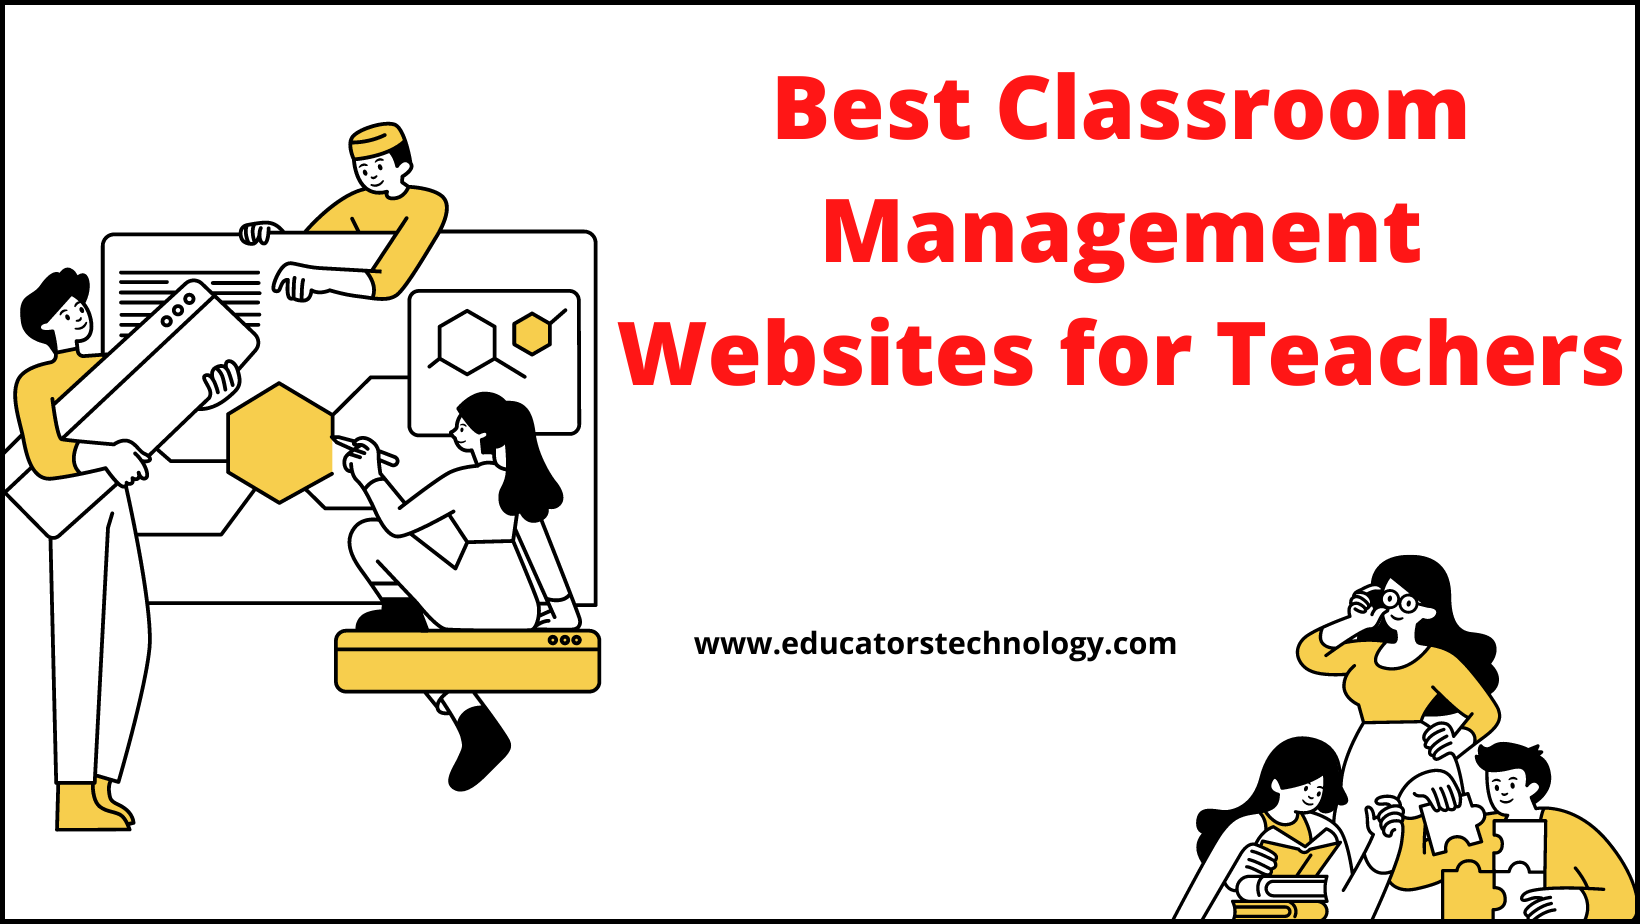 Classroom management websites